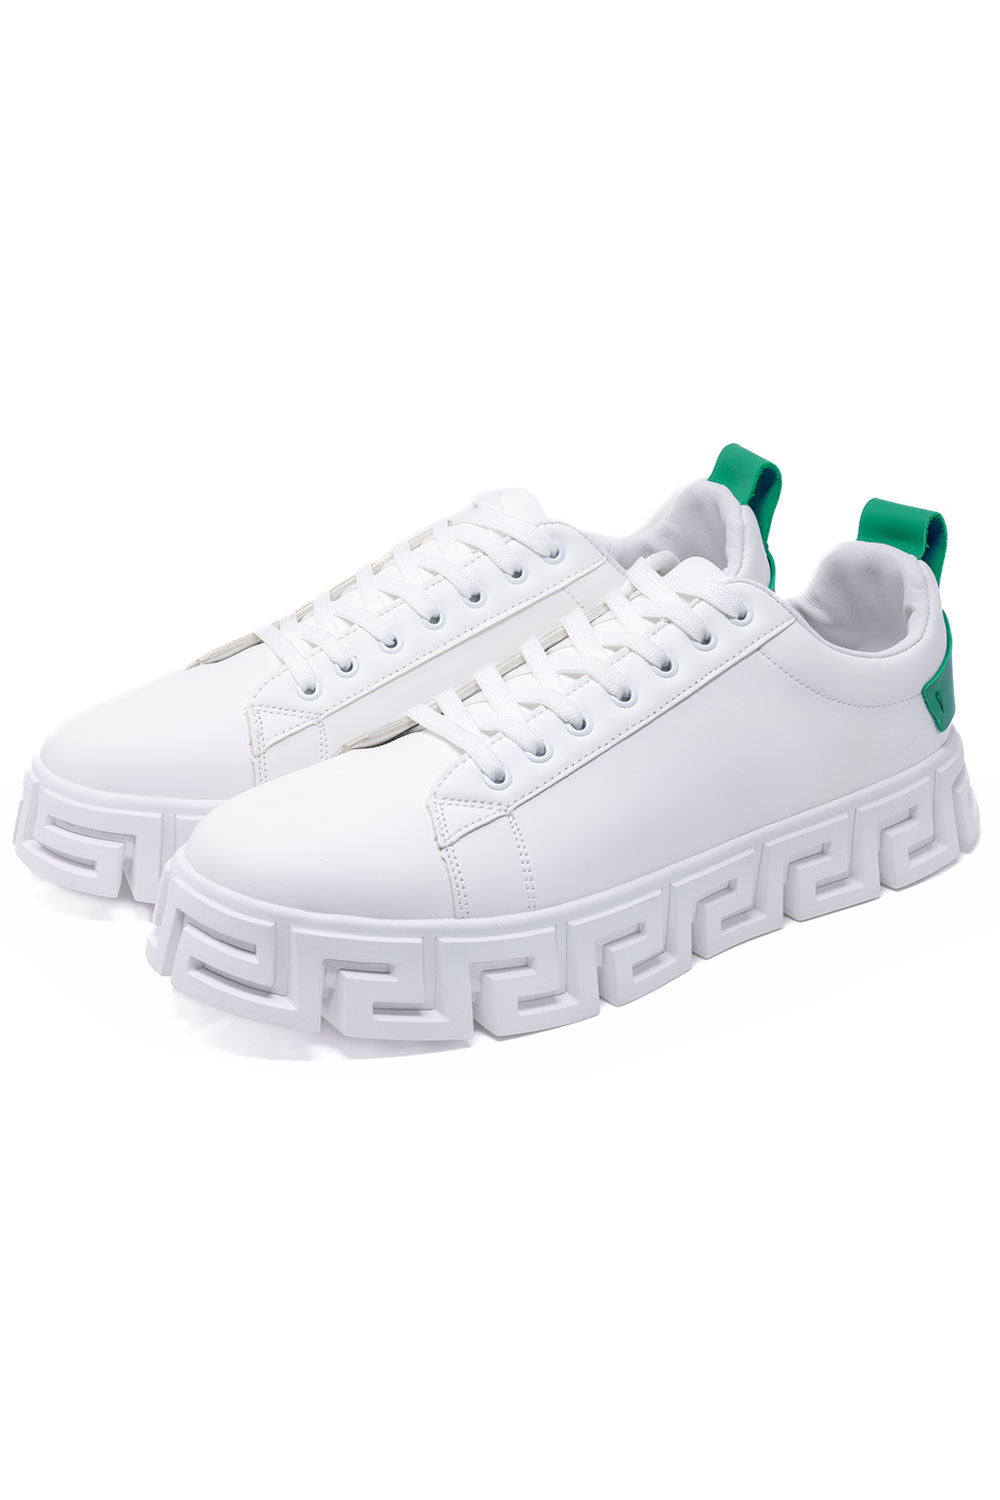 Barabas Men's Greek Key Sole Pattern Premium Sneakers 4SK06 White Green